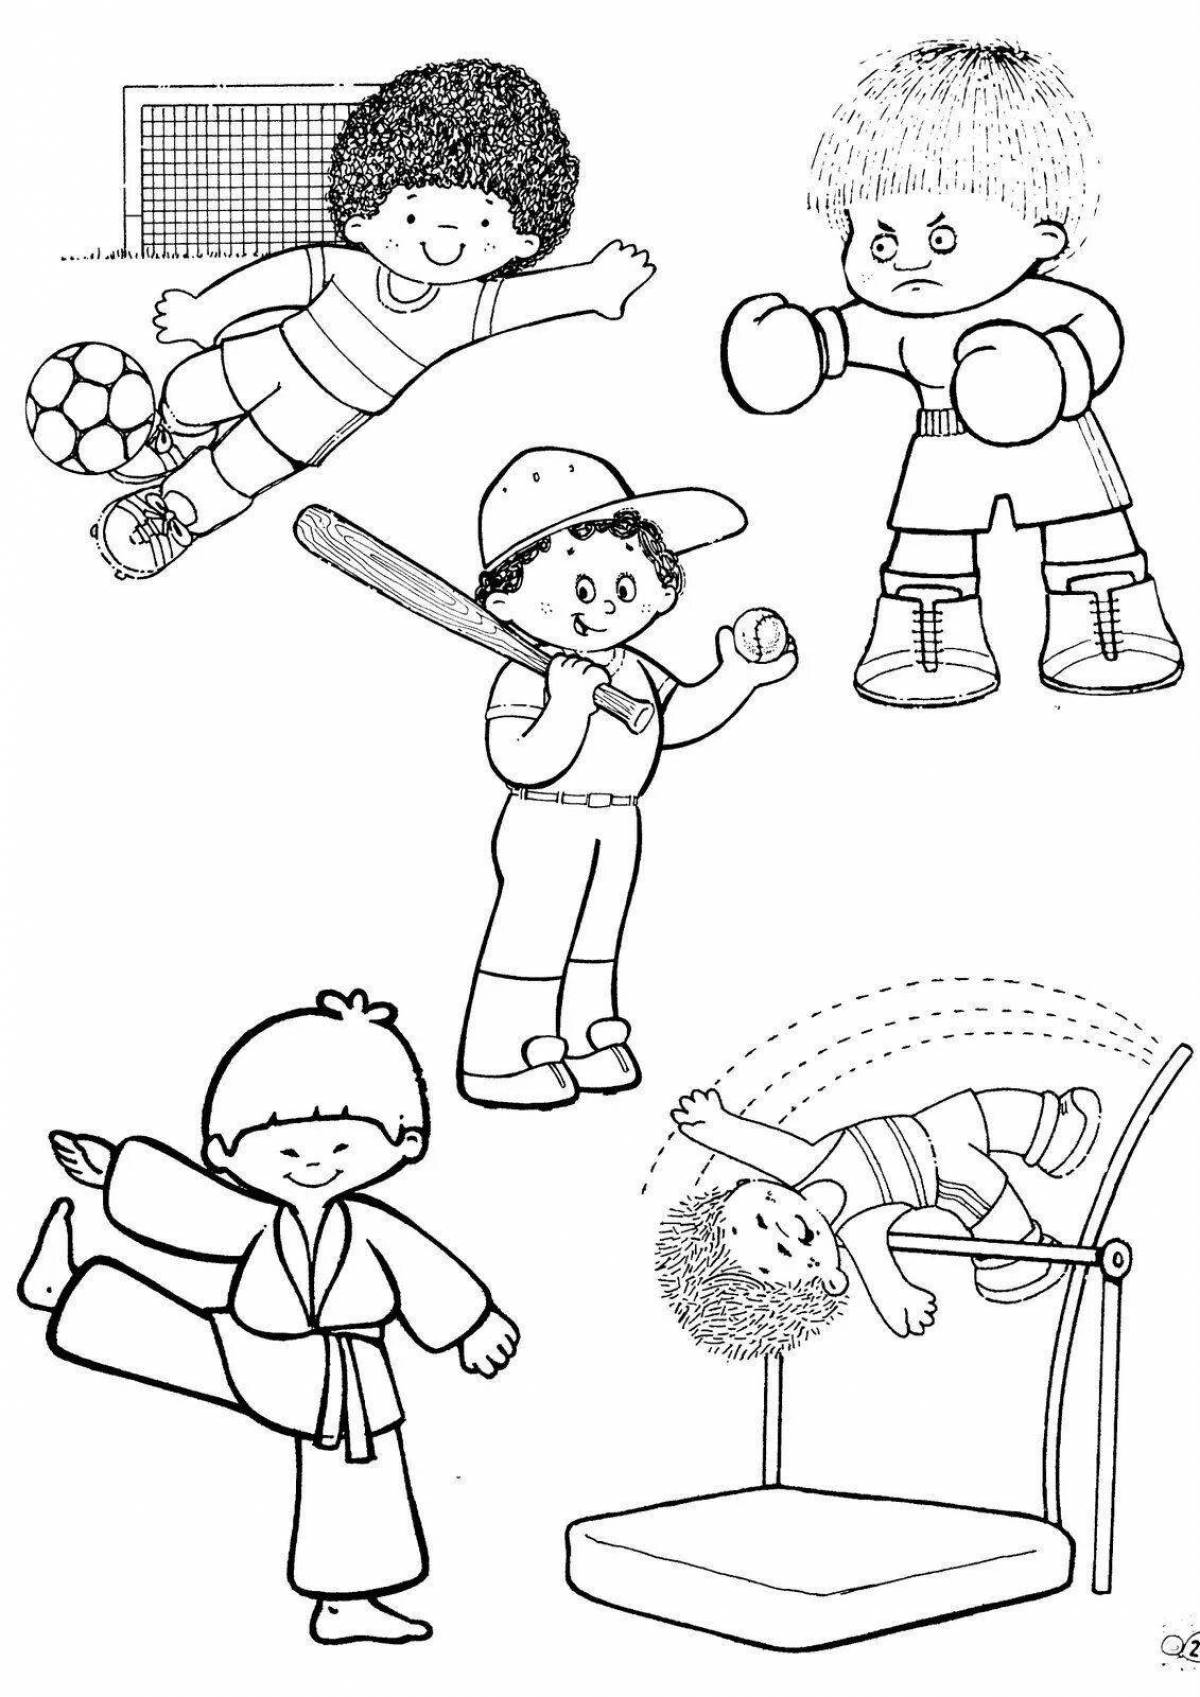 Fabulous sports coloring book for kindergarten